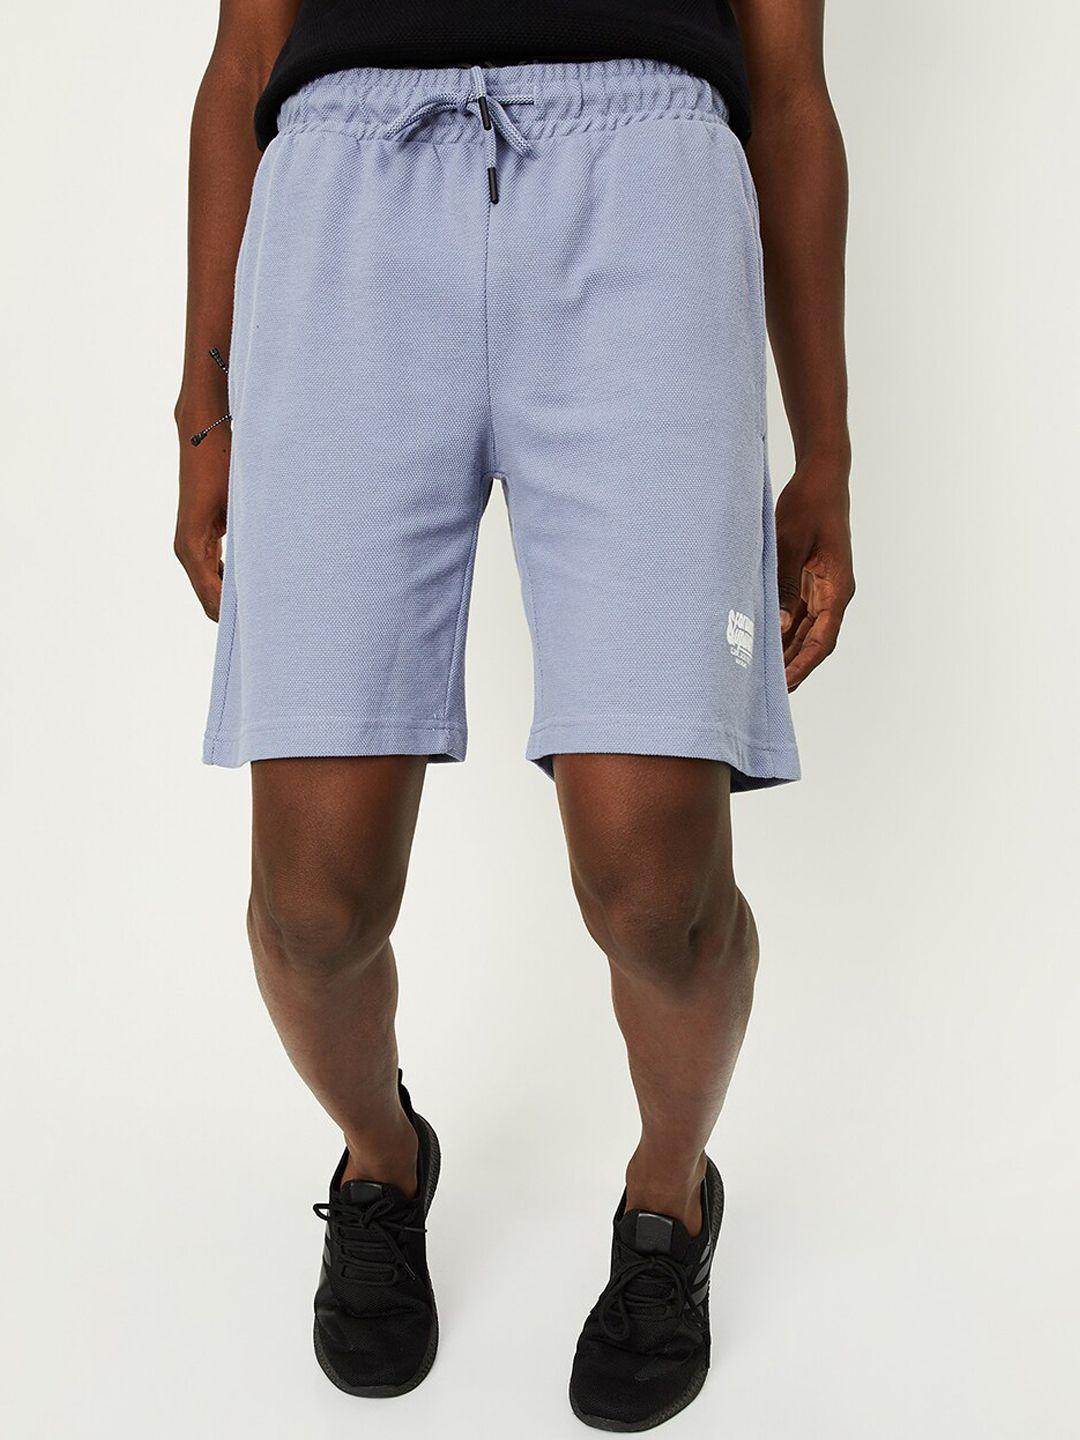 max-men-mid-rise-above-knee-length-regular-shorts